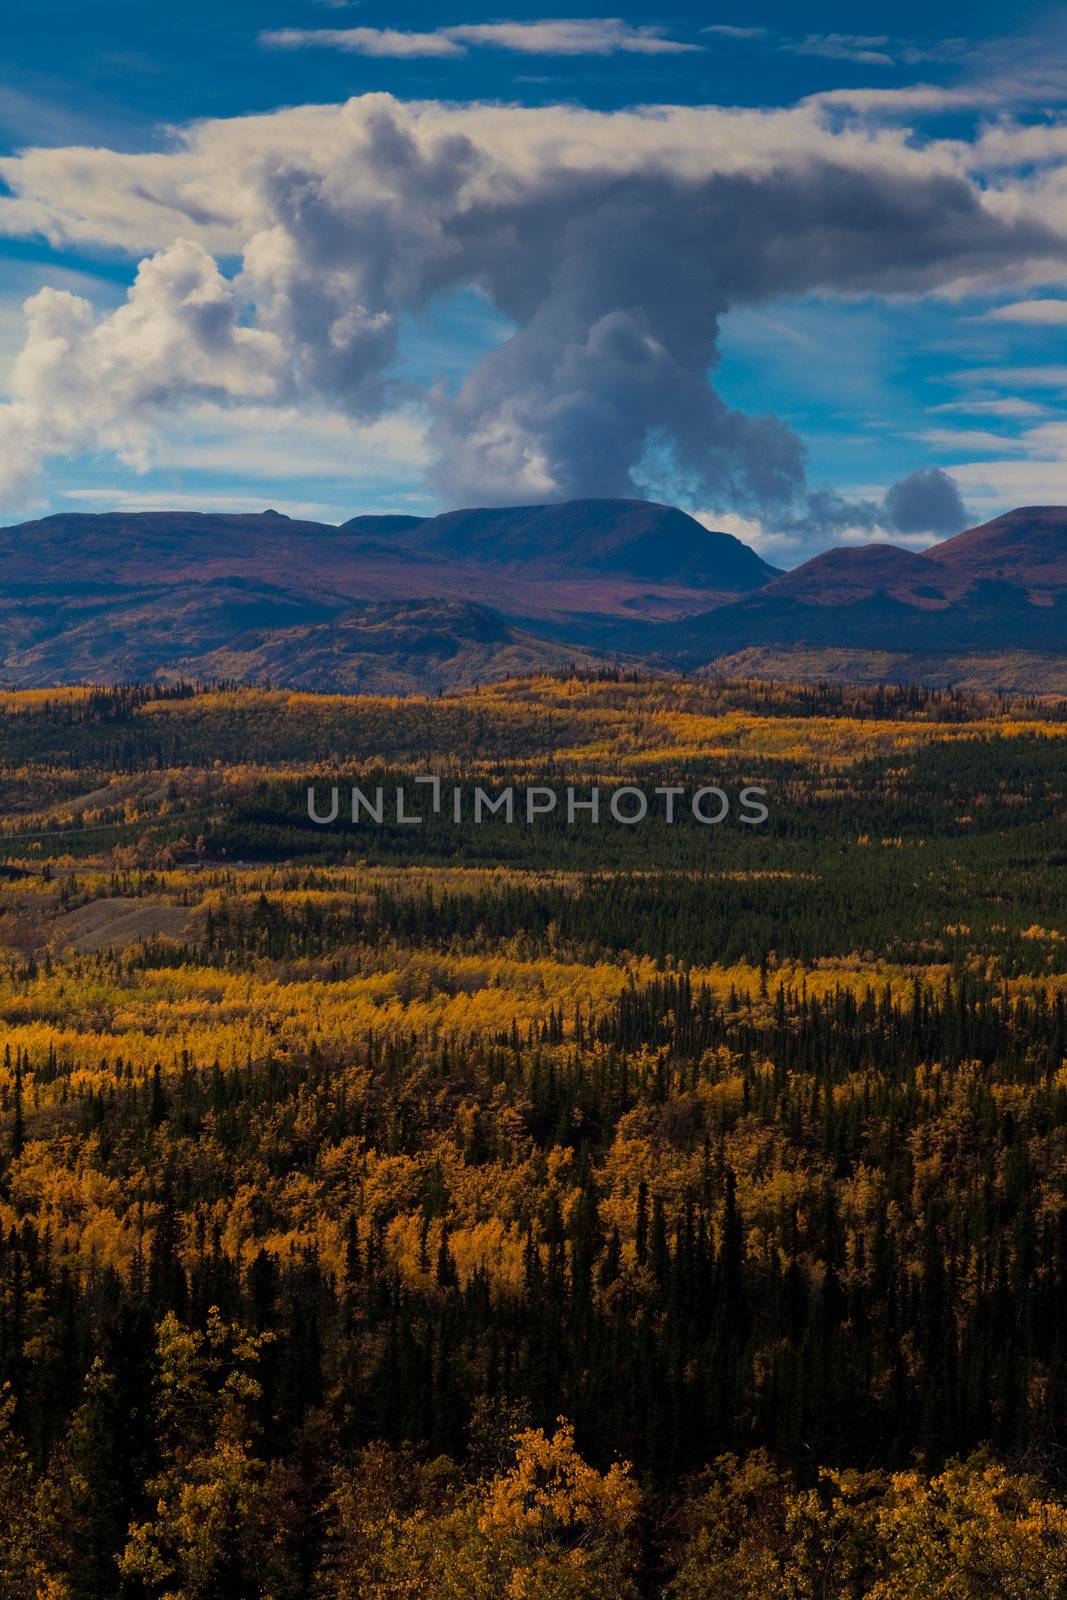 Fall-colored boreal forest (taiga) in Yukon Territory, Canada